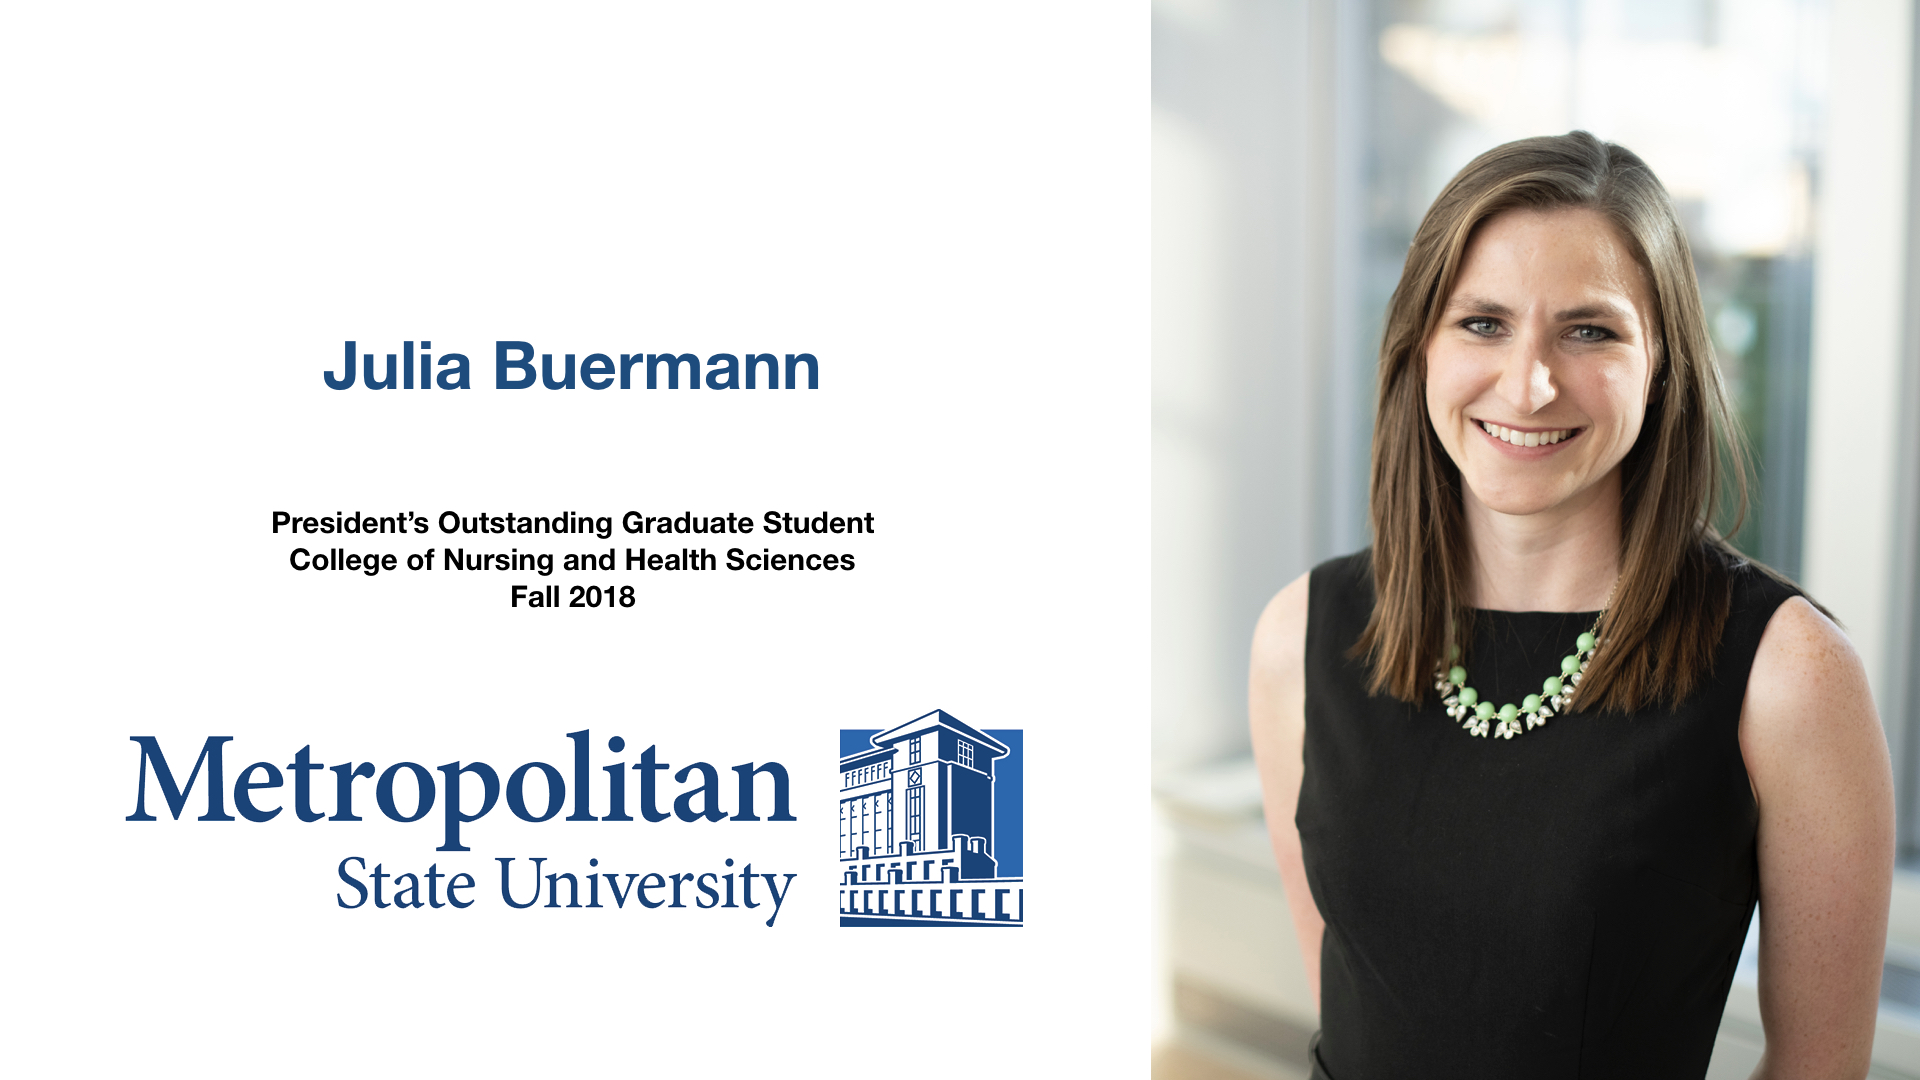 Julia Buermann Outstanding Graduate Student